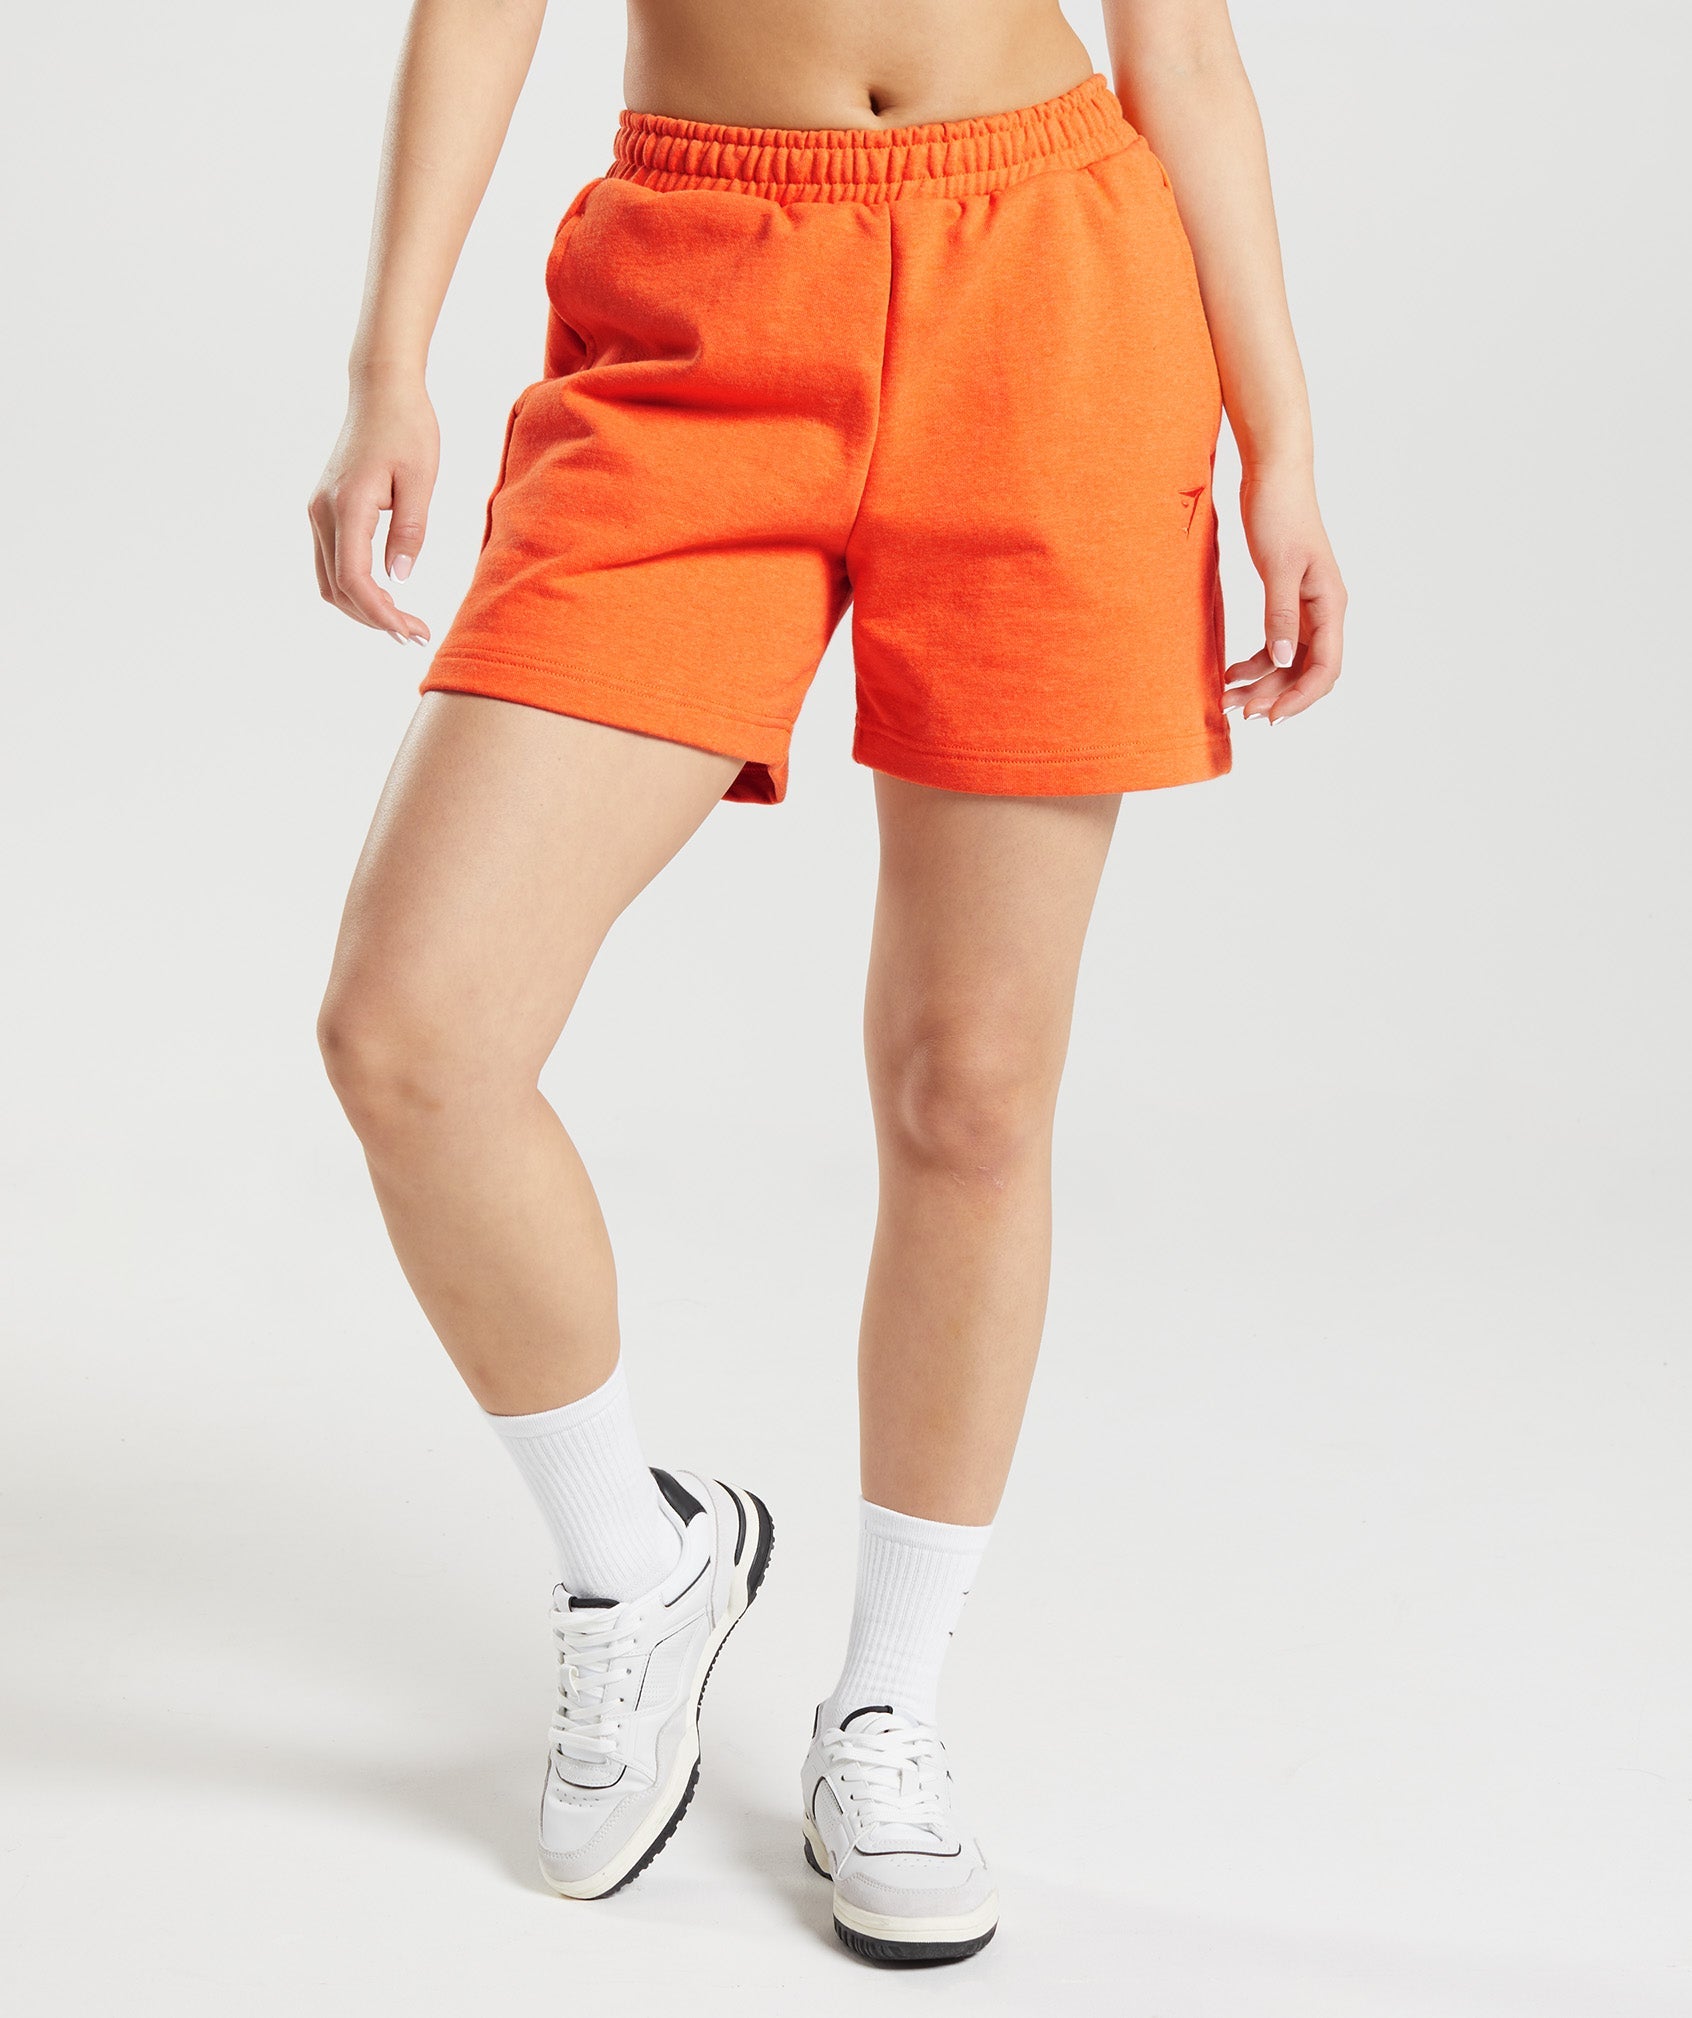 Rest Day Sweats Shorts in Blaze Orange Marl - view 1